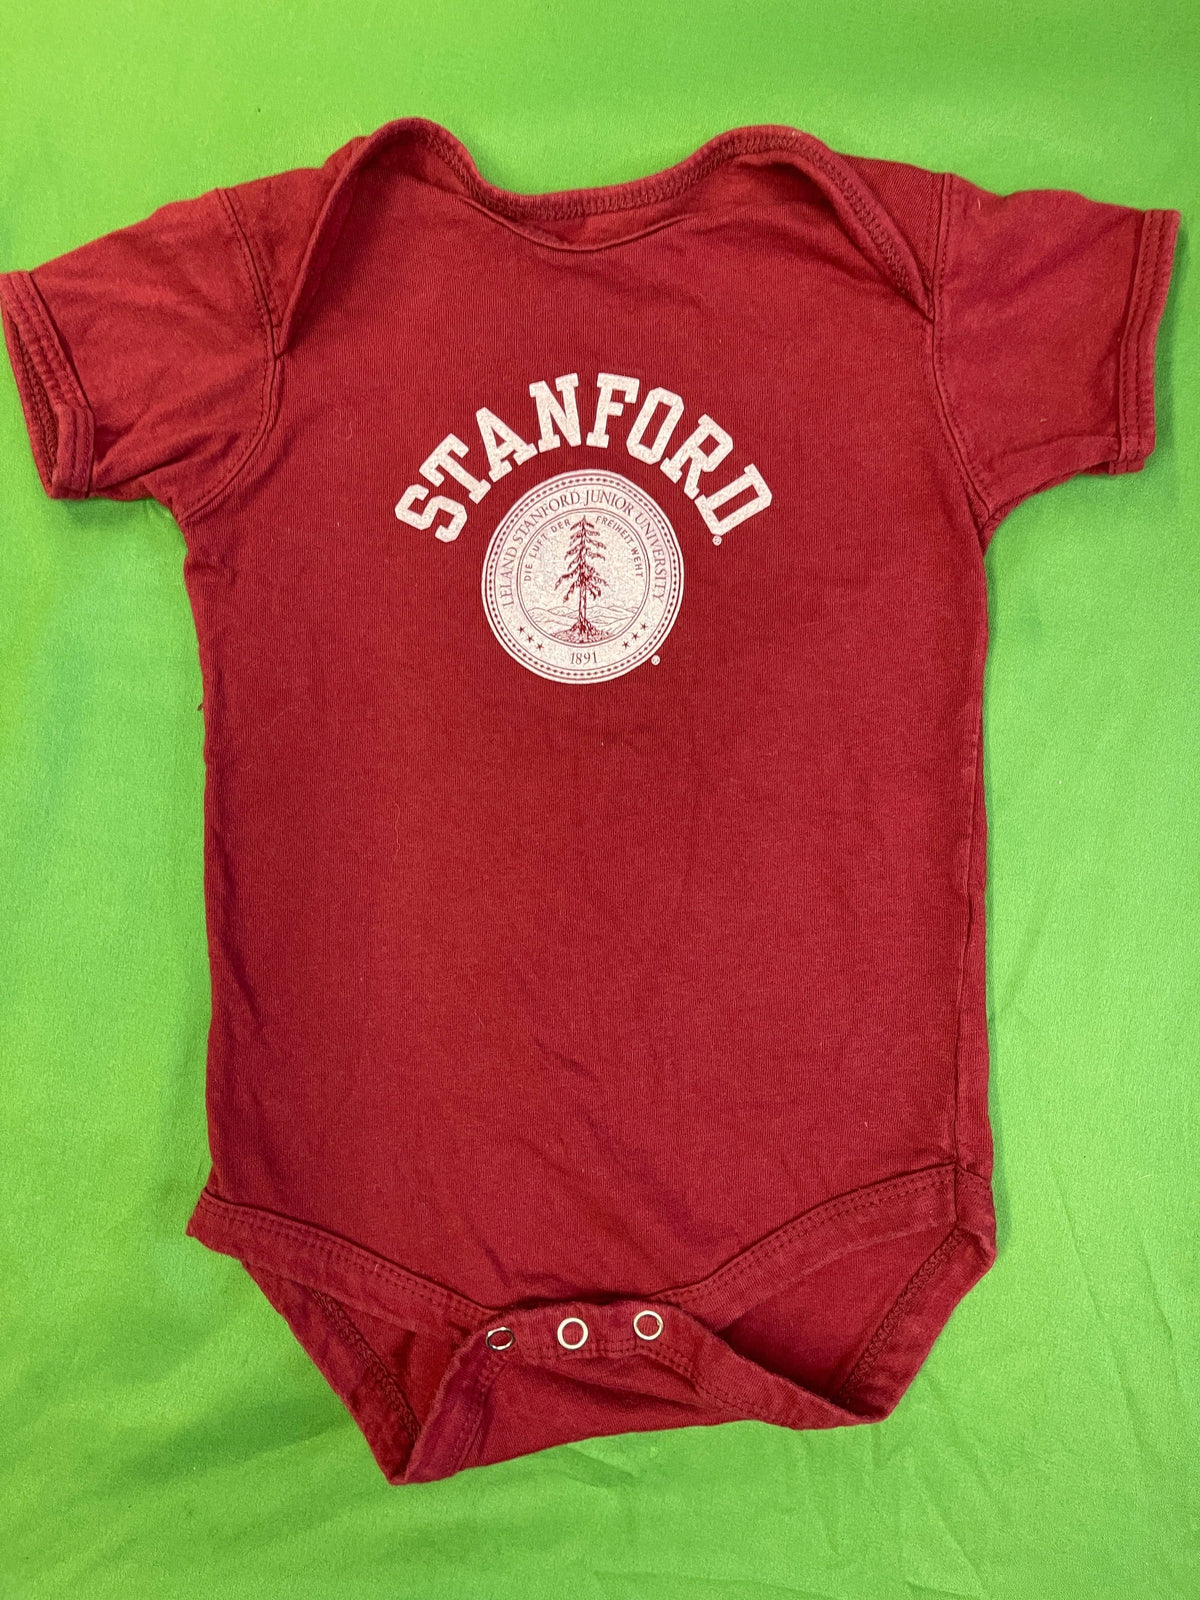 NCAA Stanford Cardinal 100% Cotton Infant Baby Bodysuit/Vest 18 Months